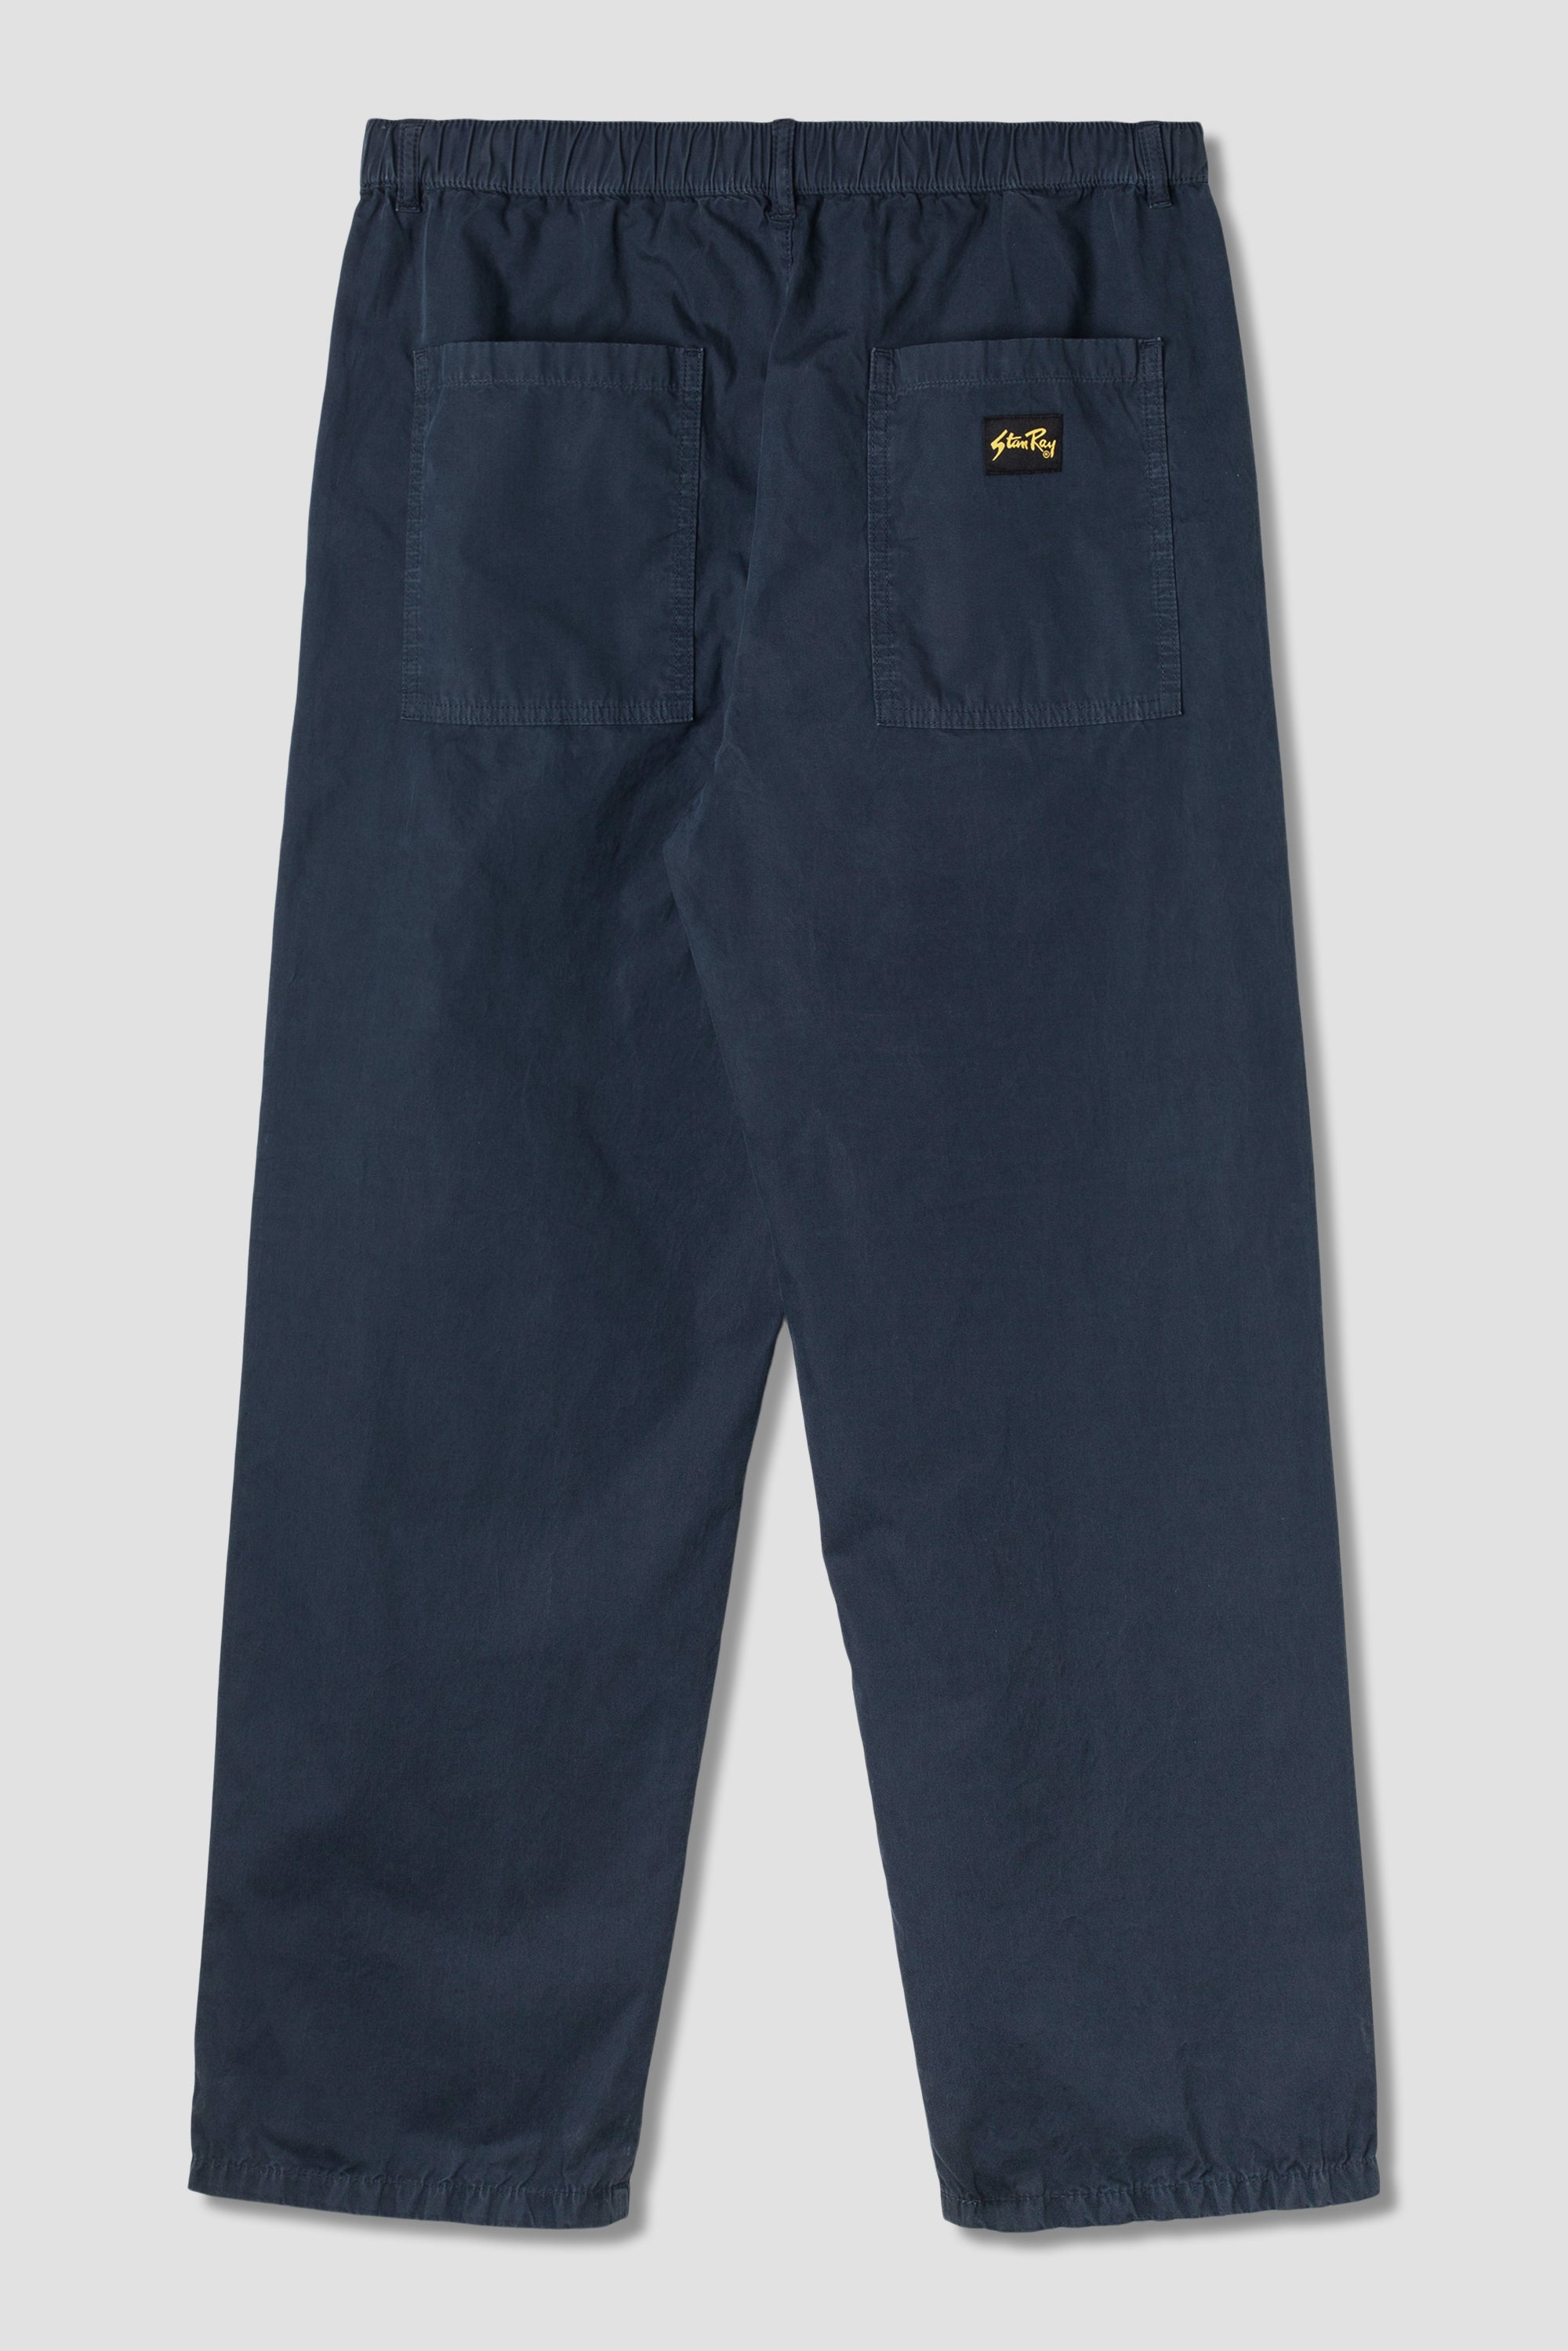 Navy jungle pants